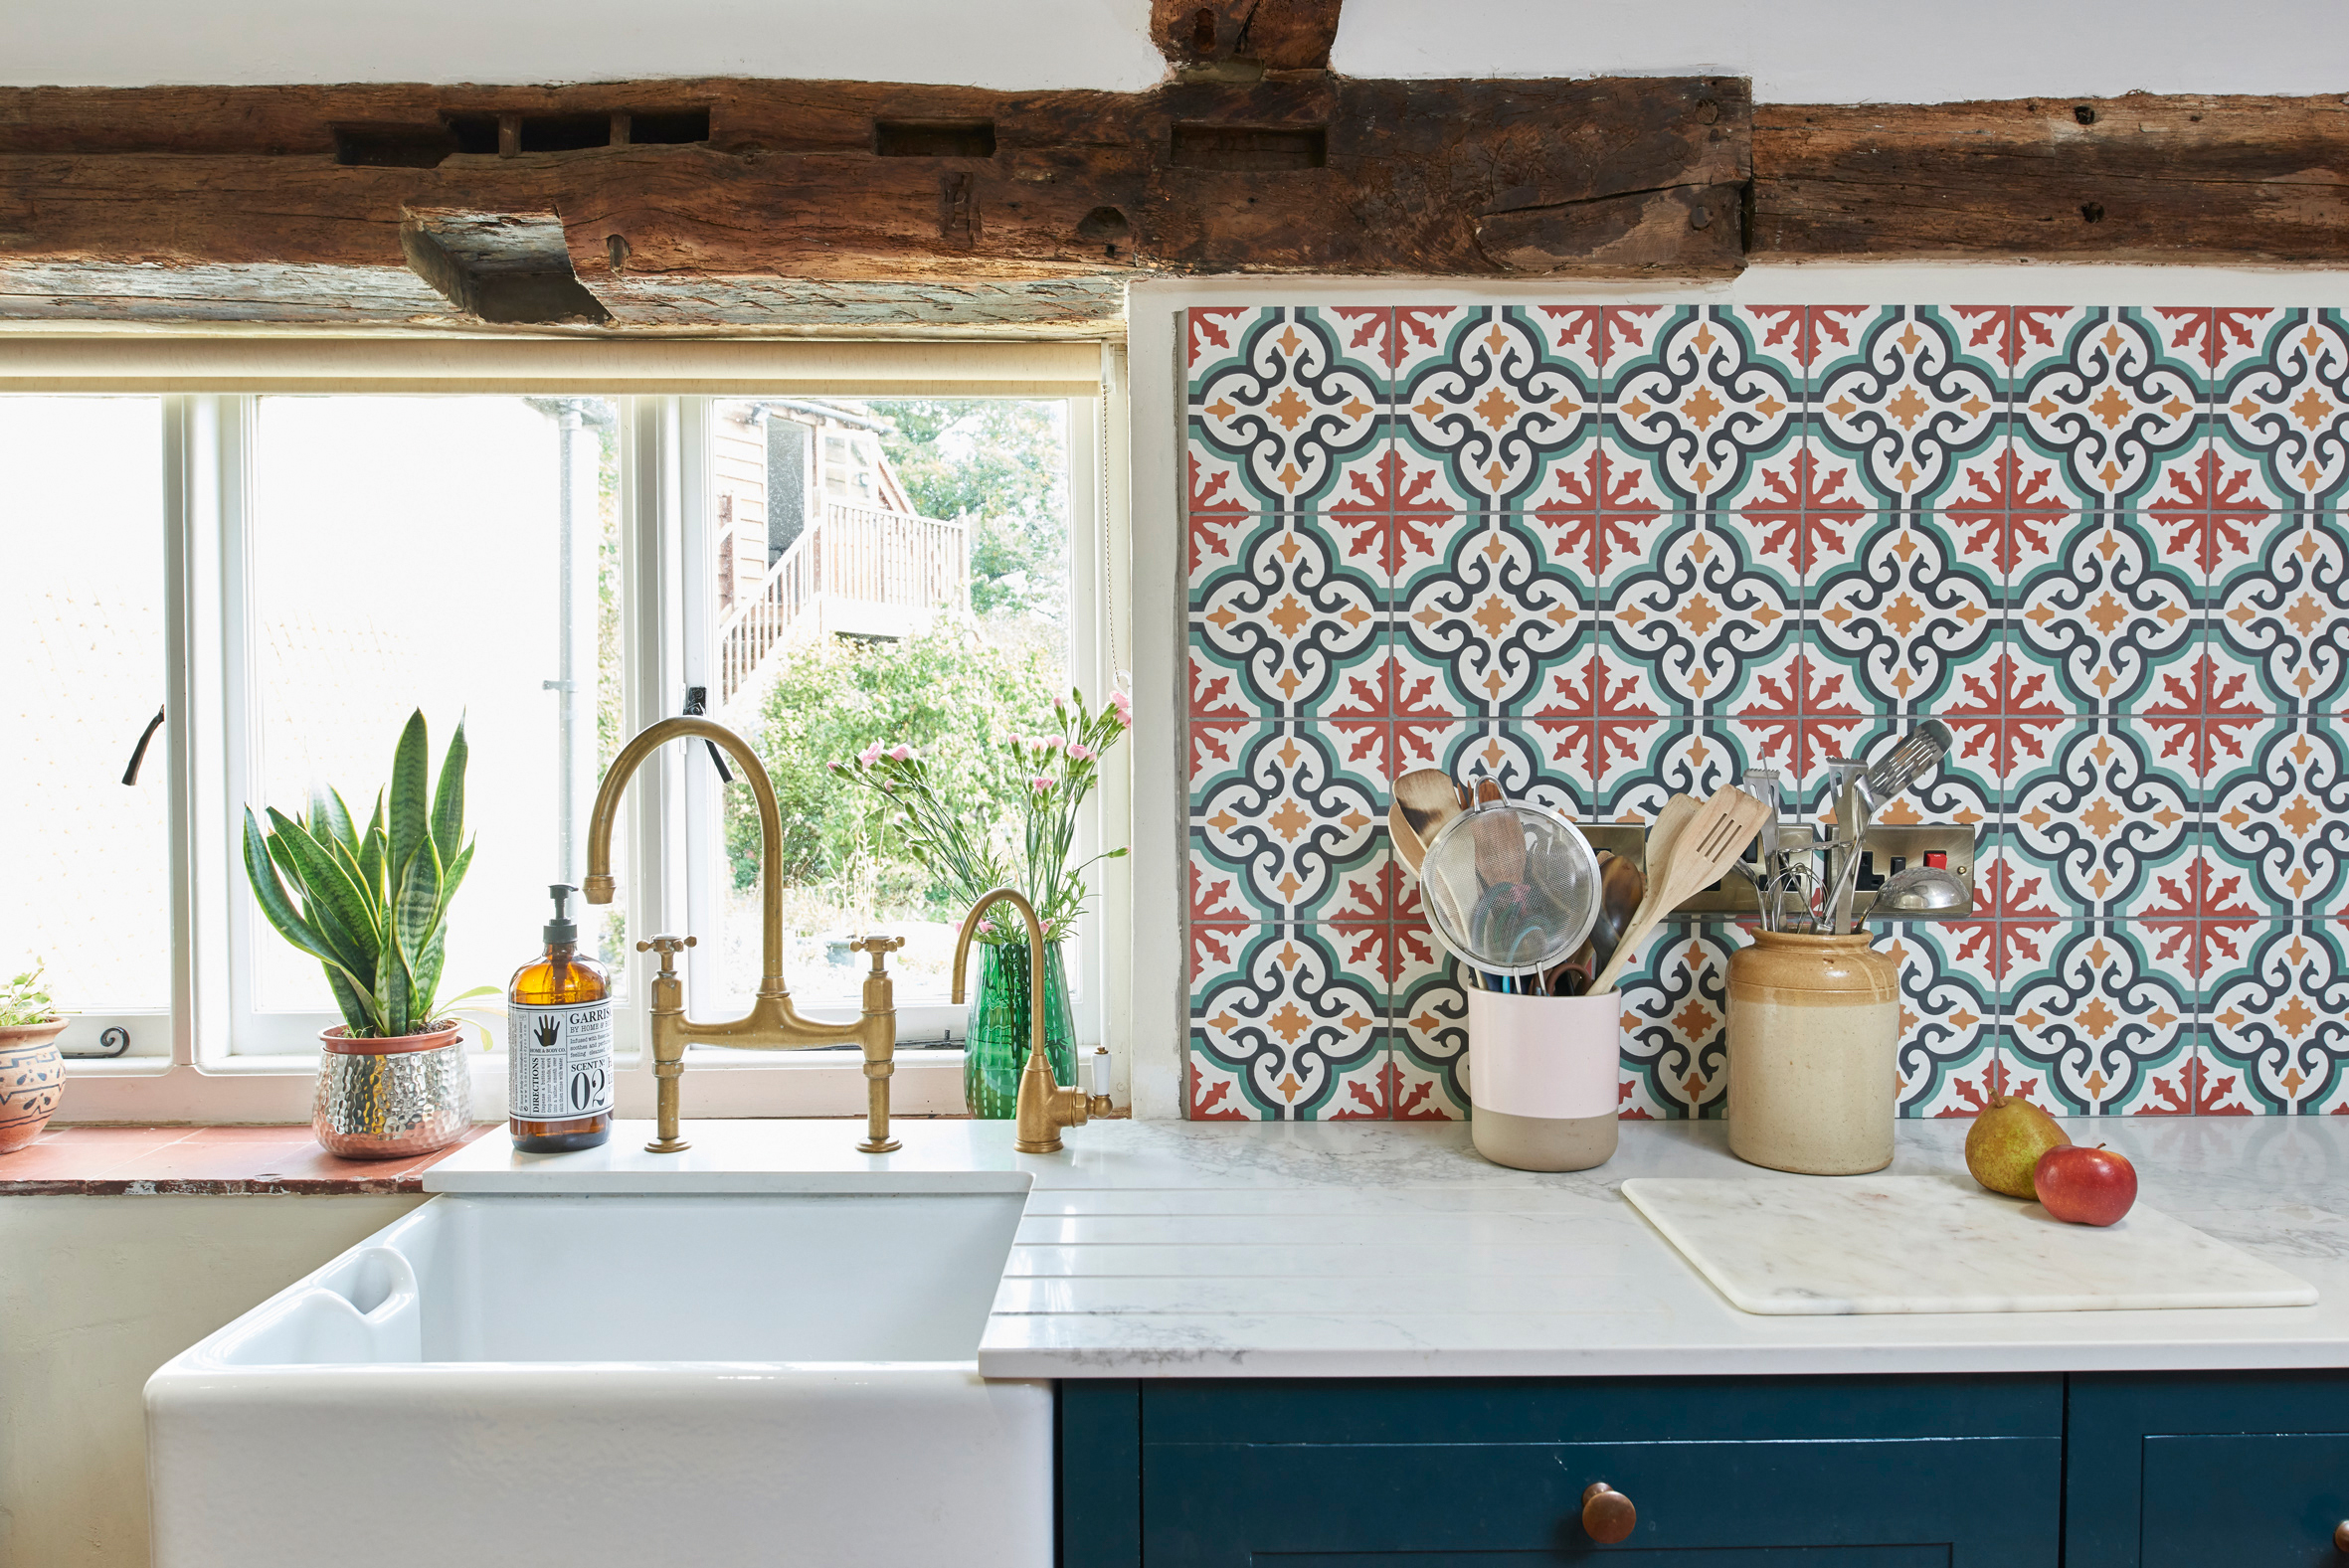 27 Kitchen Backsplash Ideas For A Quick, Tile Splashback Kitchen